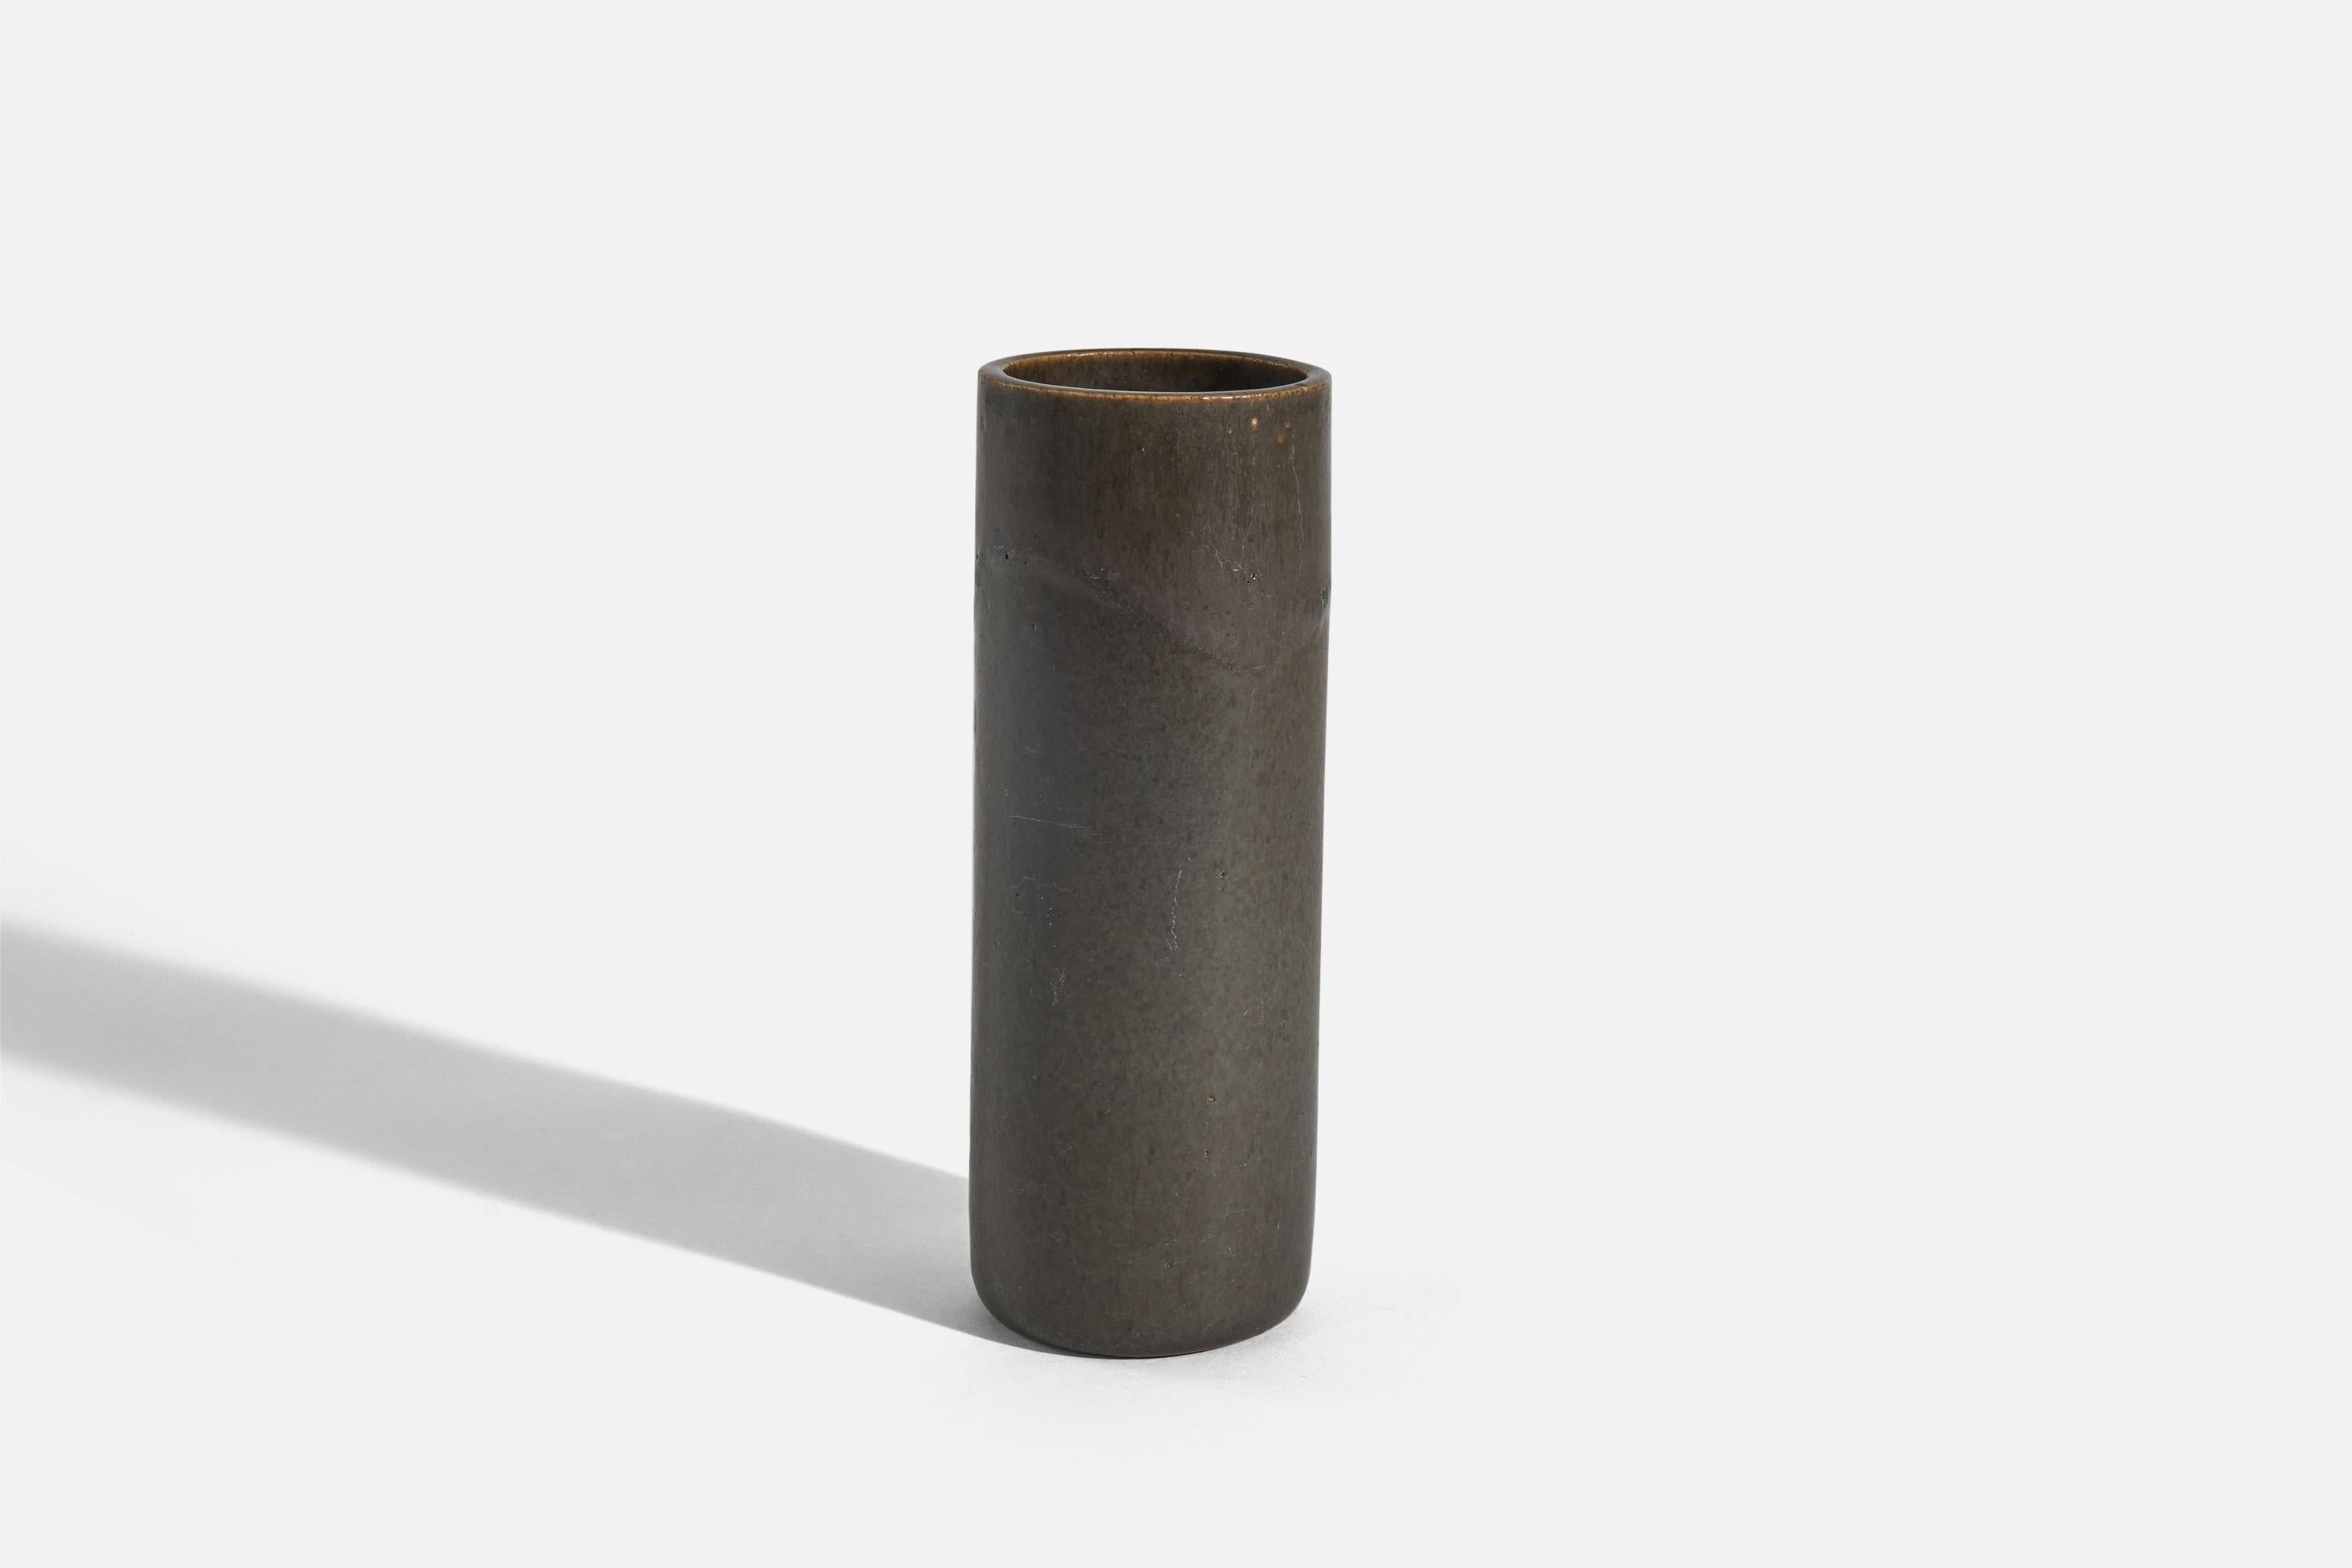 A black-glazed stoneware vase designed and produced by Agne Aronson, Sweden, c. 1960s.